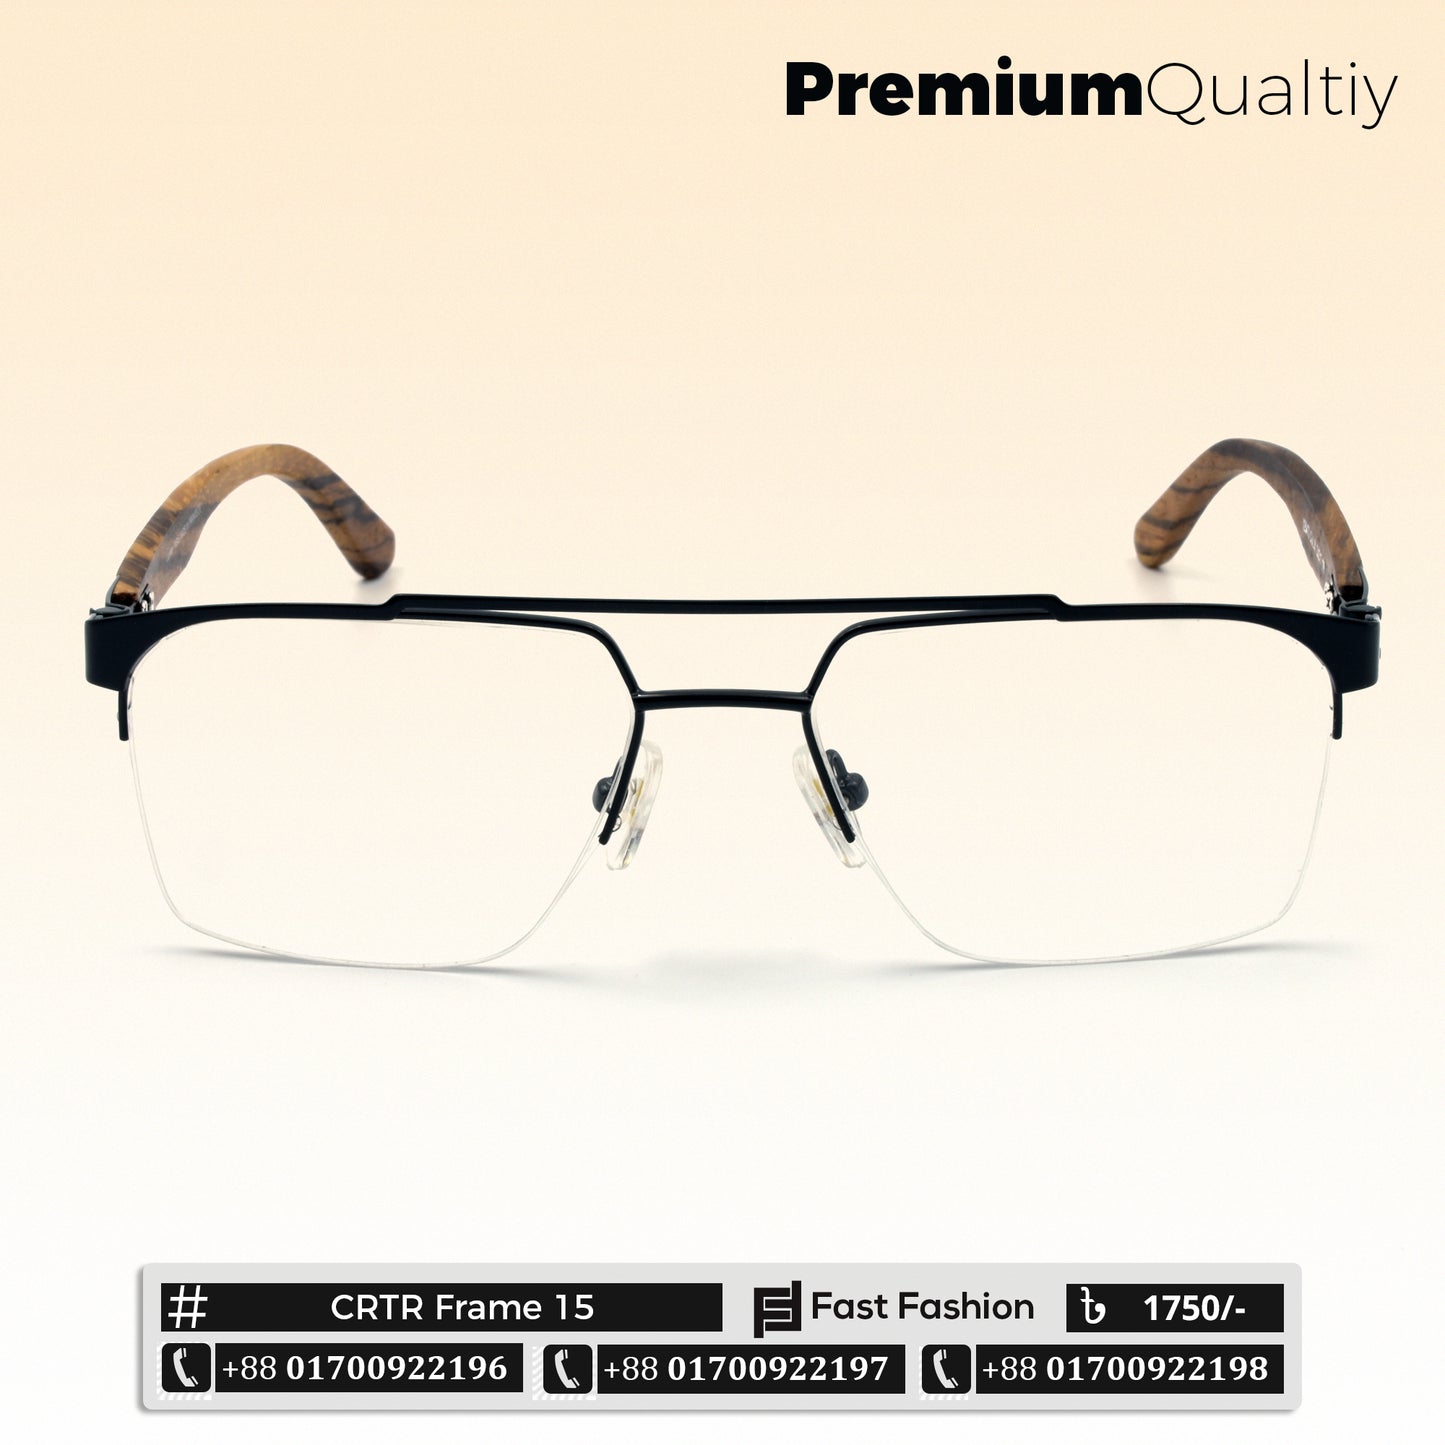 Modern Looking Trendy Stylish Optic Frame | CRTR Frame 15 | Premium Quality